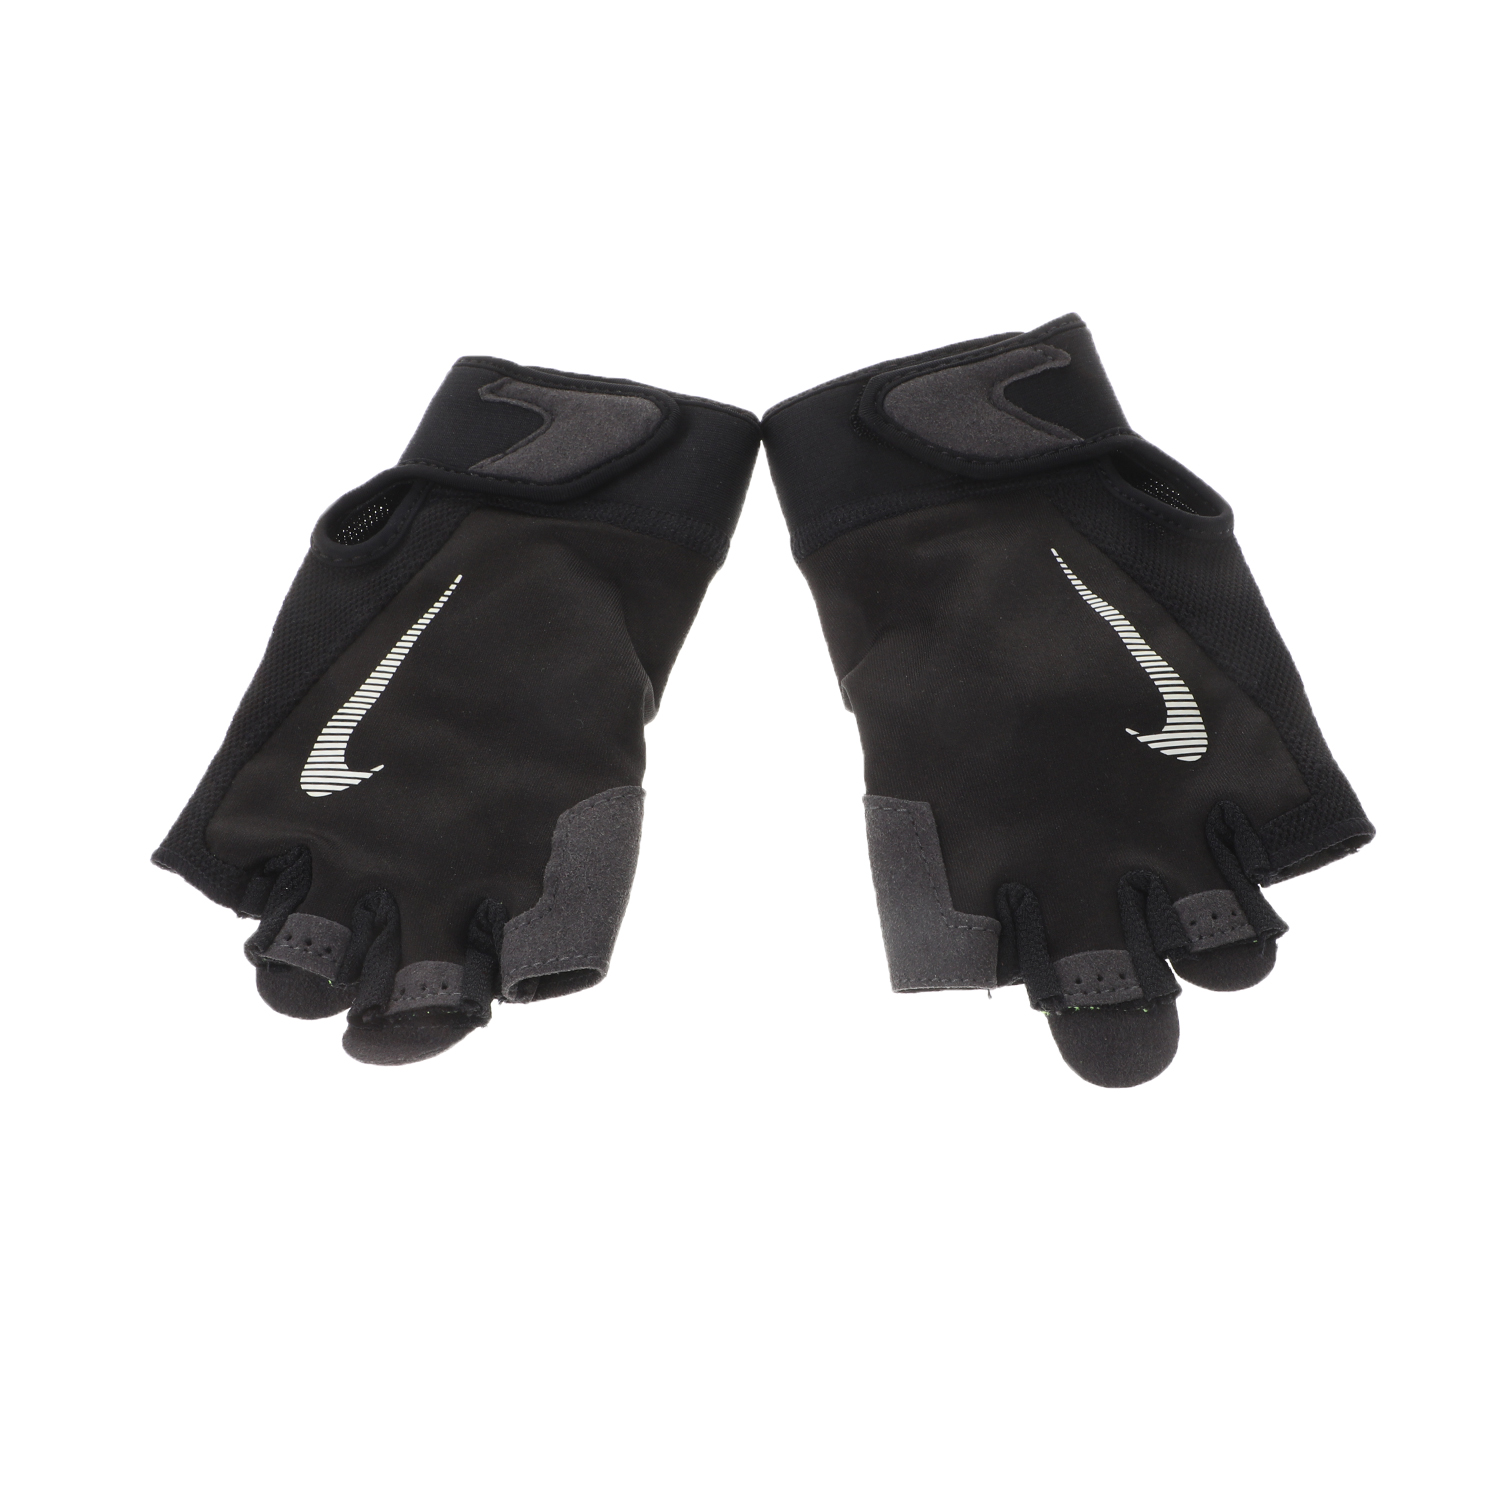 NIKE - Ανδρικά γάντια προπόνησης NIKE N.LG.C2.MD ULTIMATE FITNESS μαύρα Ανδρικά/Αξεσουάρ/Αθλητικά Είδη/Εξοπλισμός